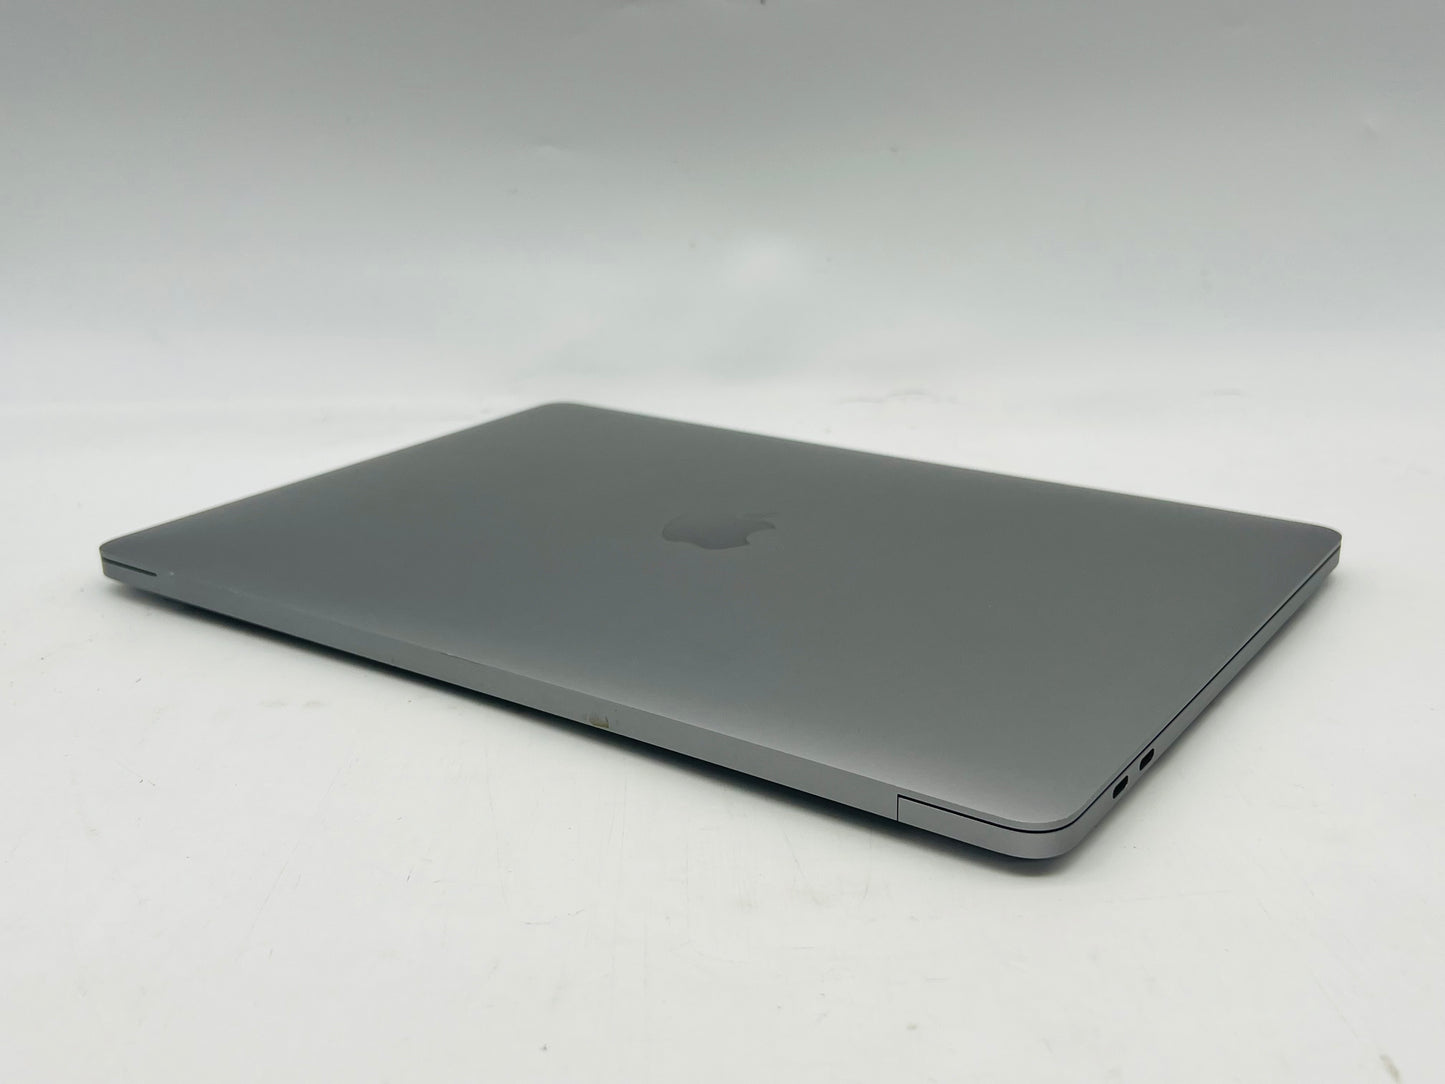 Apple 2020 MacBook Pro 13 in 2.3GHz i7 16GB RAM 512GB SSD IIPG1536 - Very Good